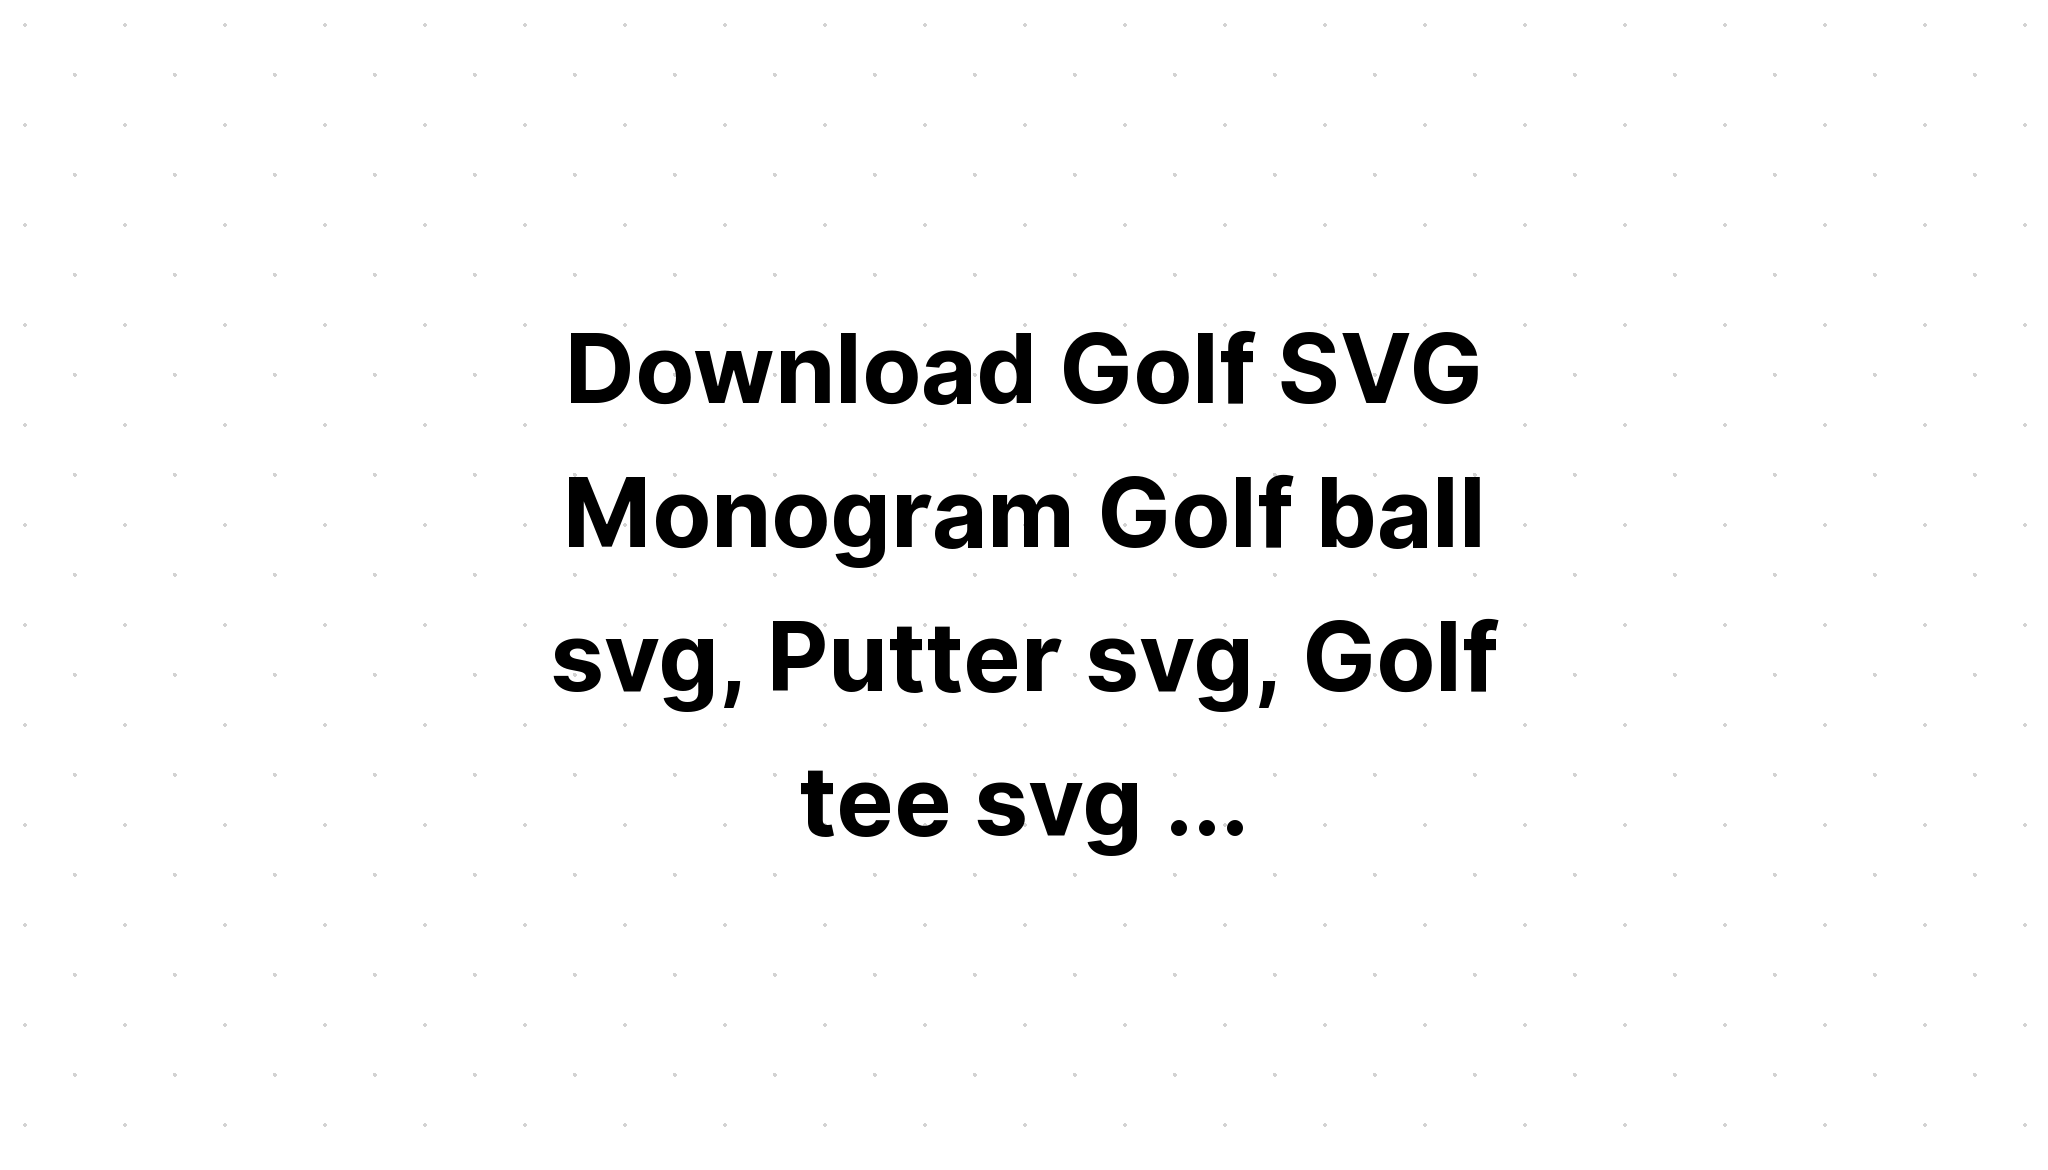 Download Golf Monogram Svg - Layered SVG Cut File